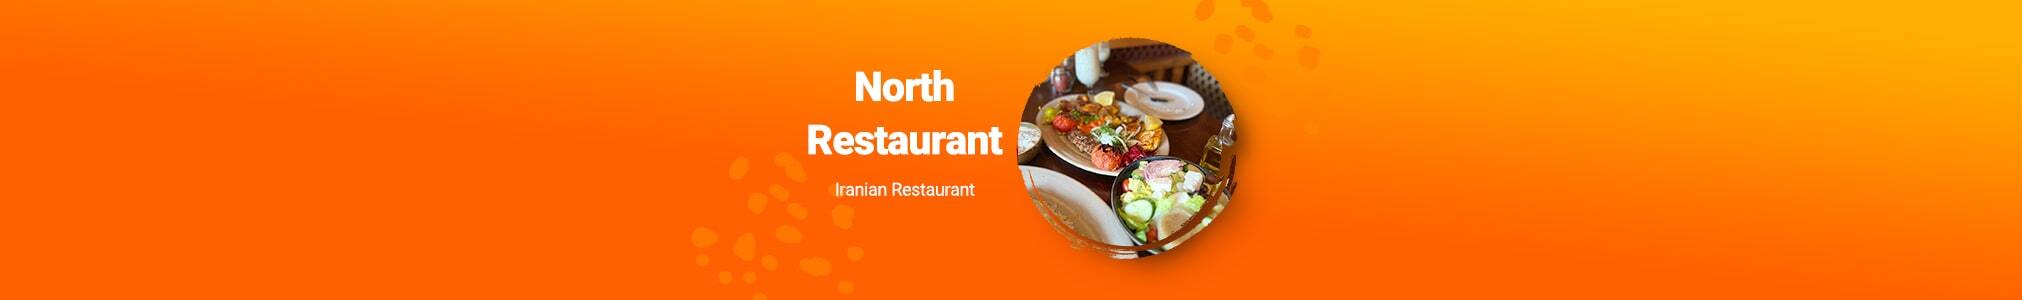 North Restaurant